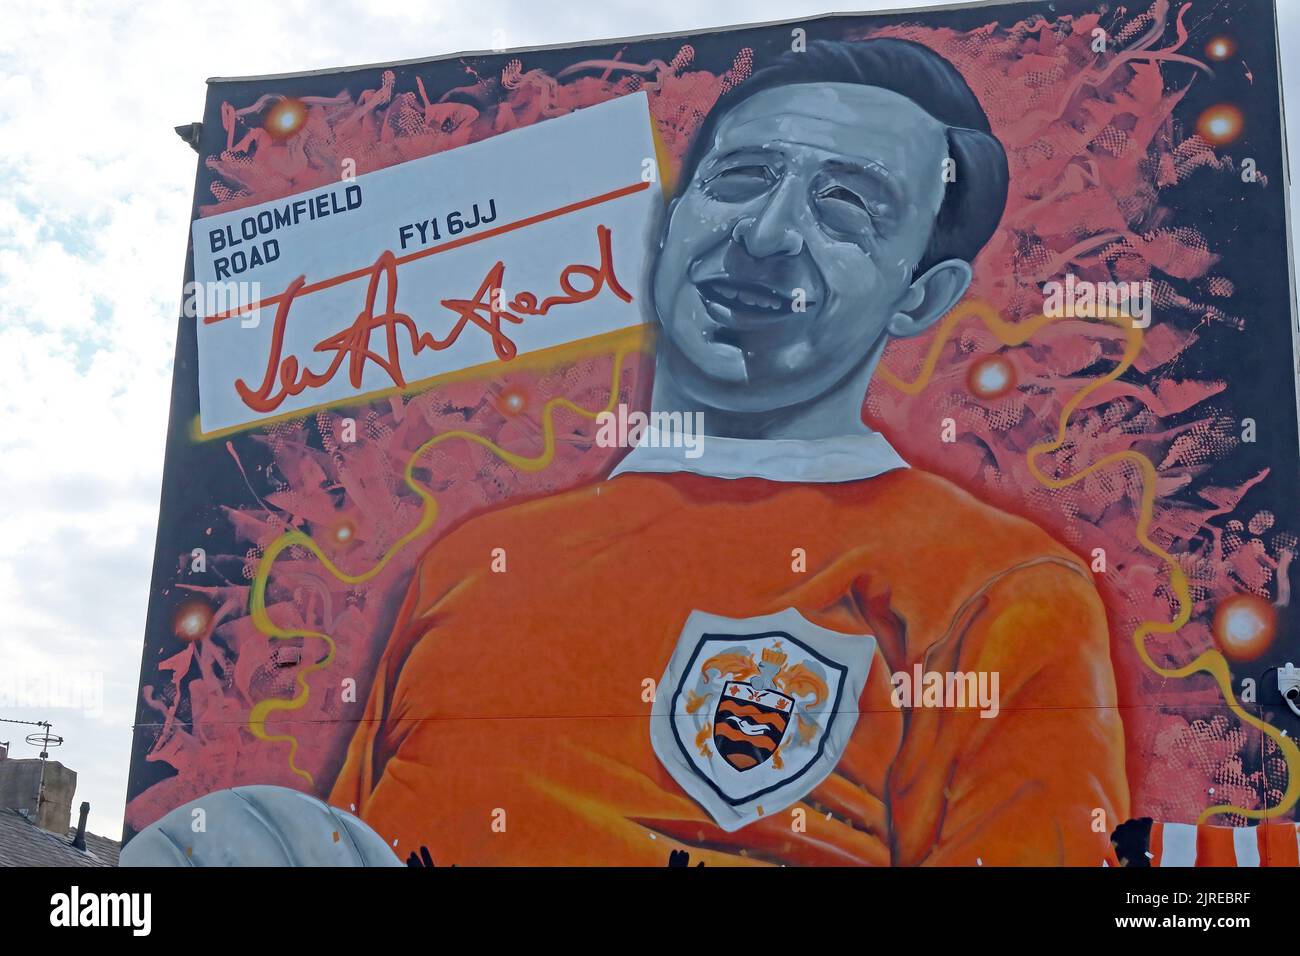 Jimmy Armfield (James Christopher Armfield) malte Wandgemälde in der Bloomfield Road, Blackpool, Lancs, England, Großbritannien, FY1 6JJ Stockfoto